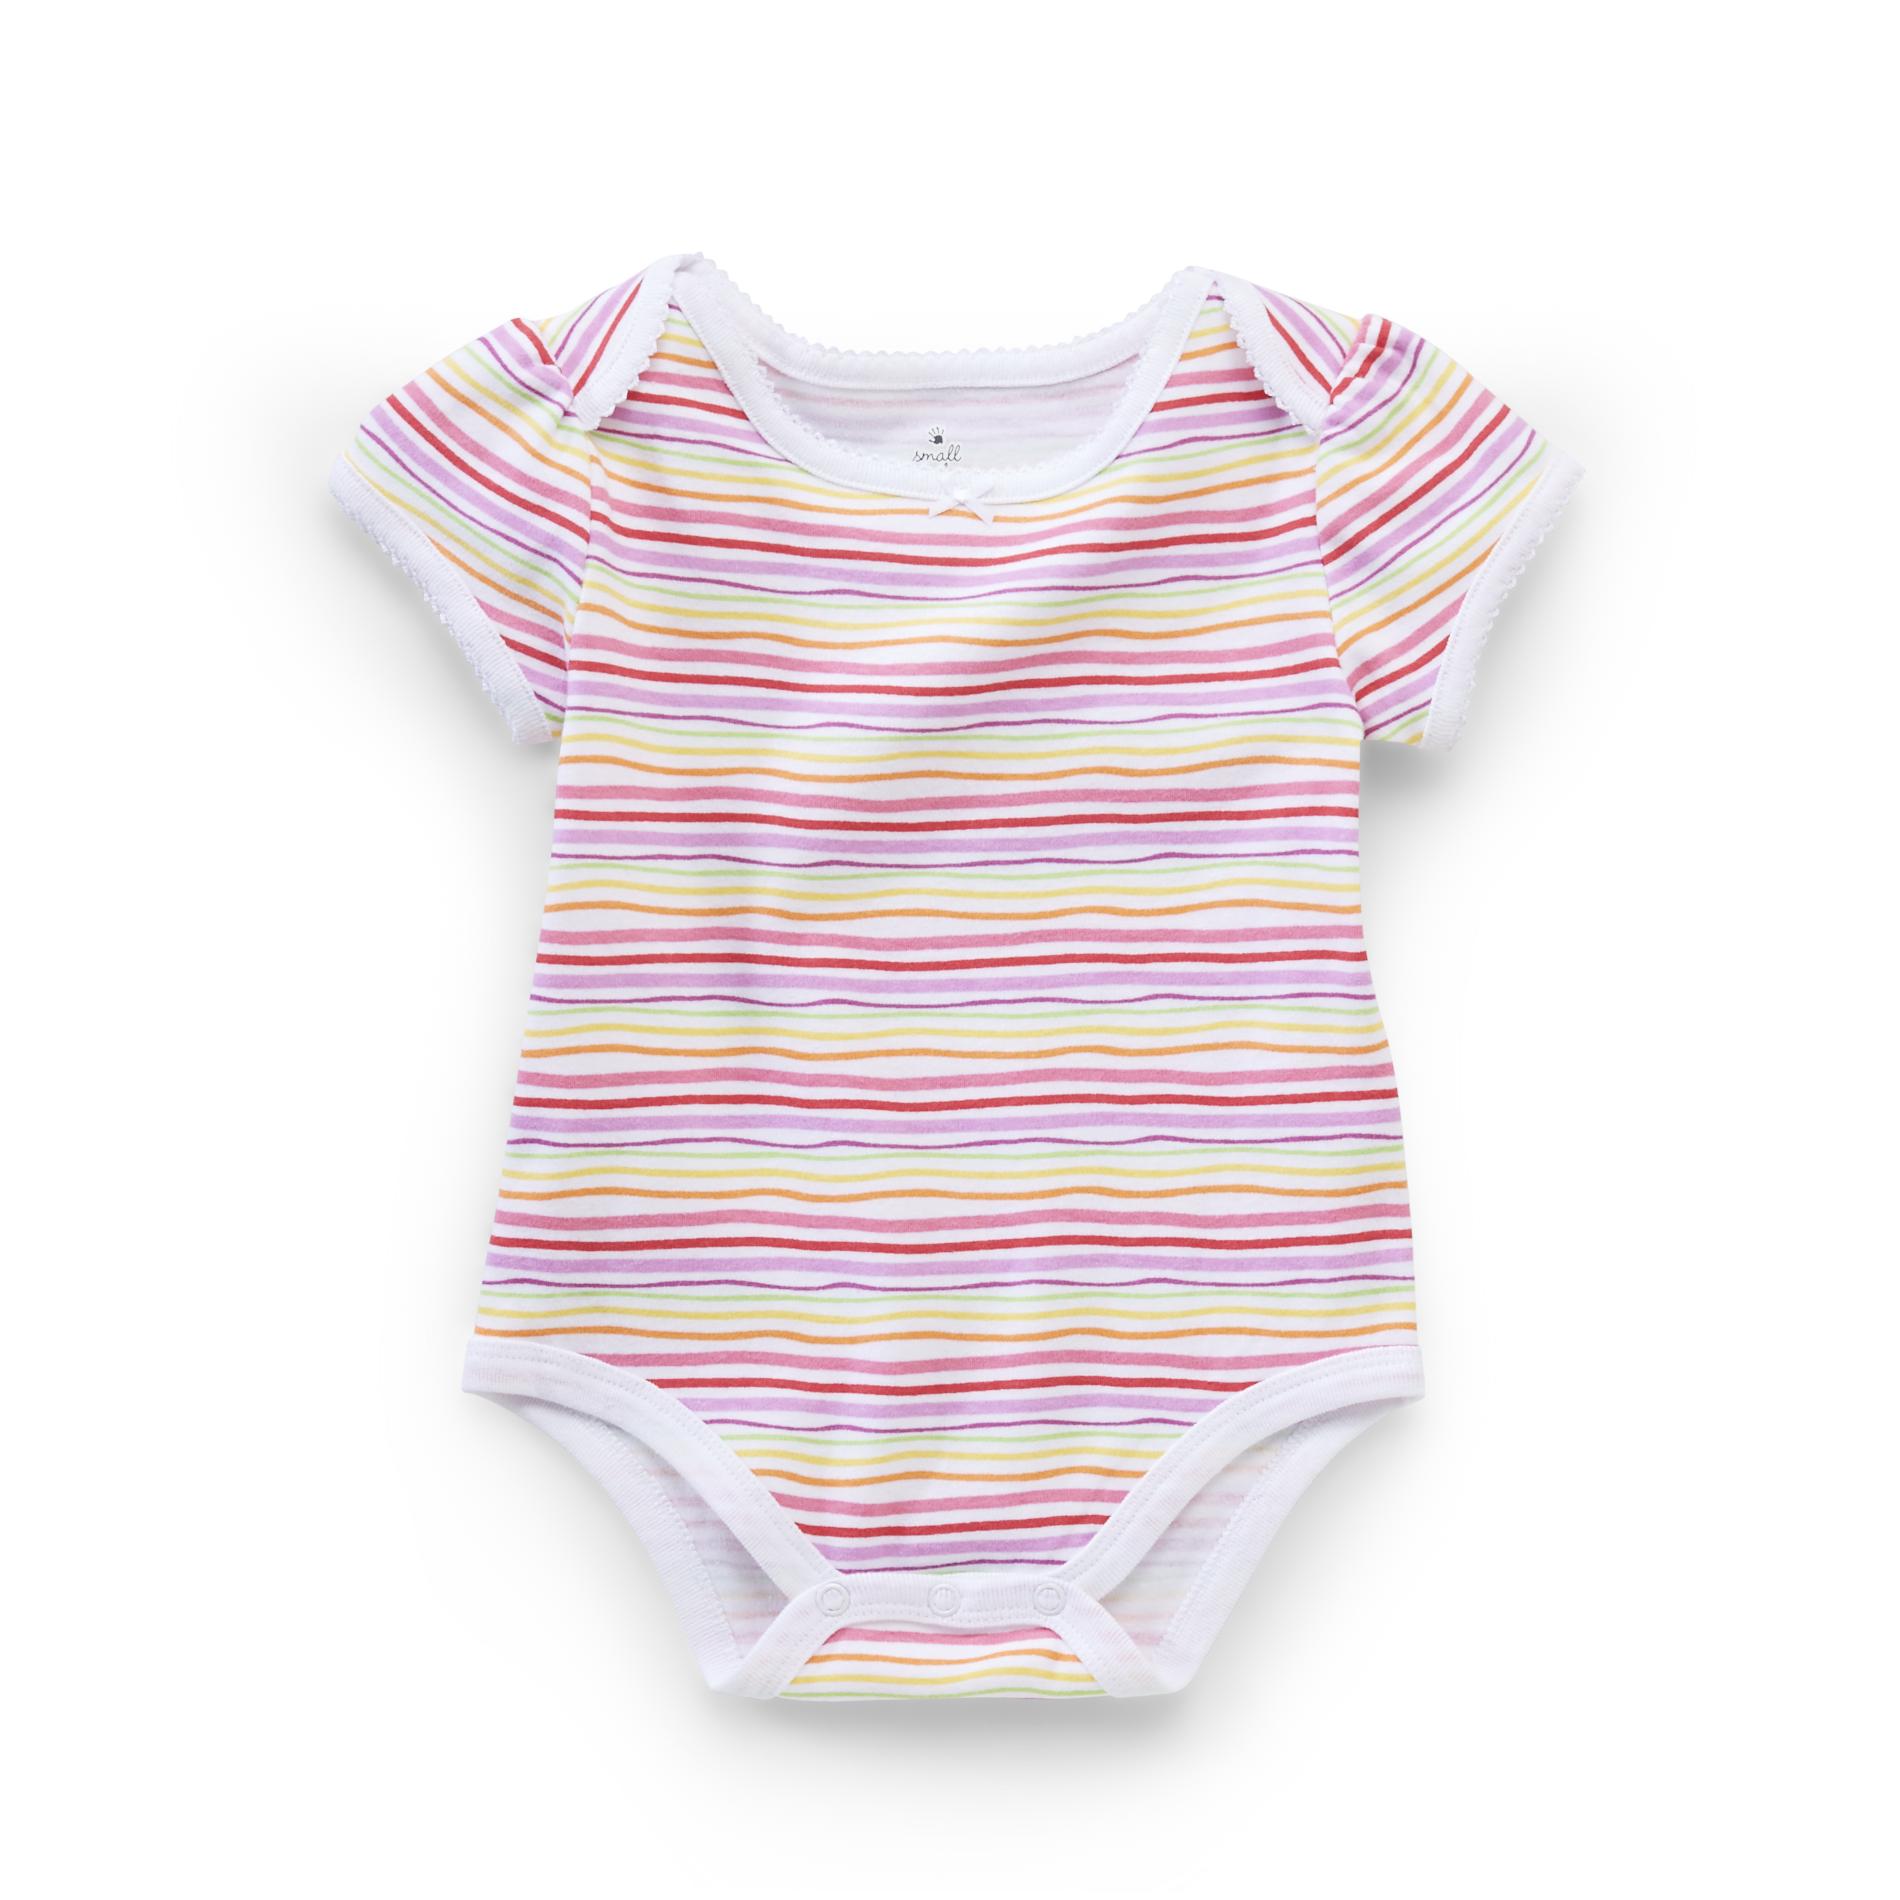 Small Wonders Newborn Girl's Short-Sleeve Bodysuit - Striped